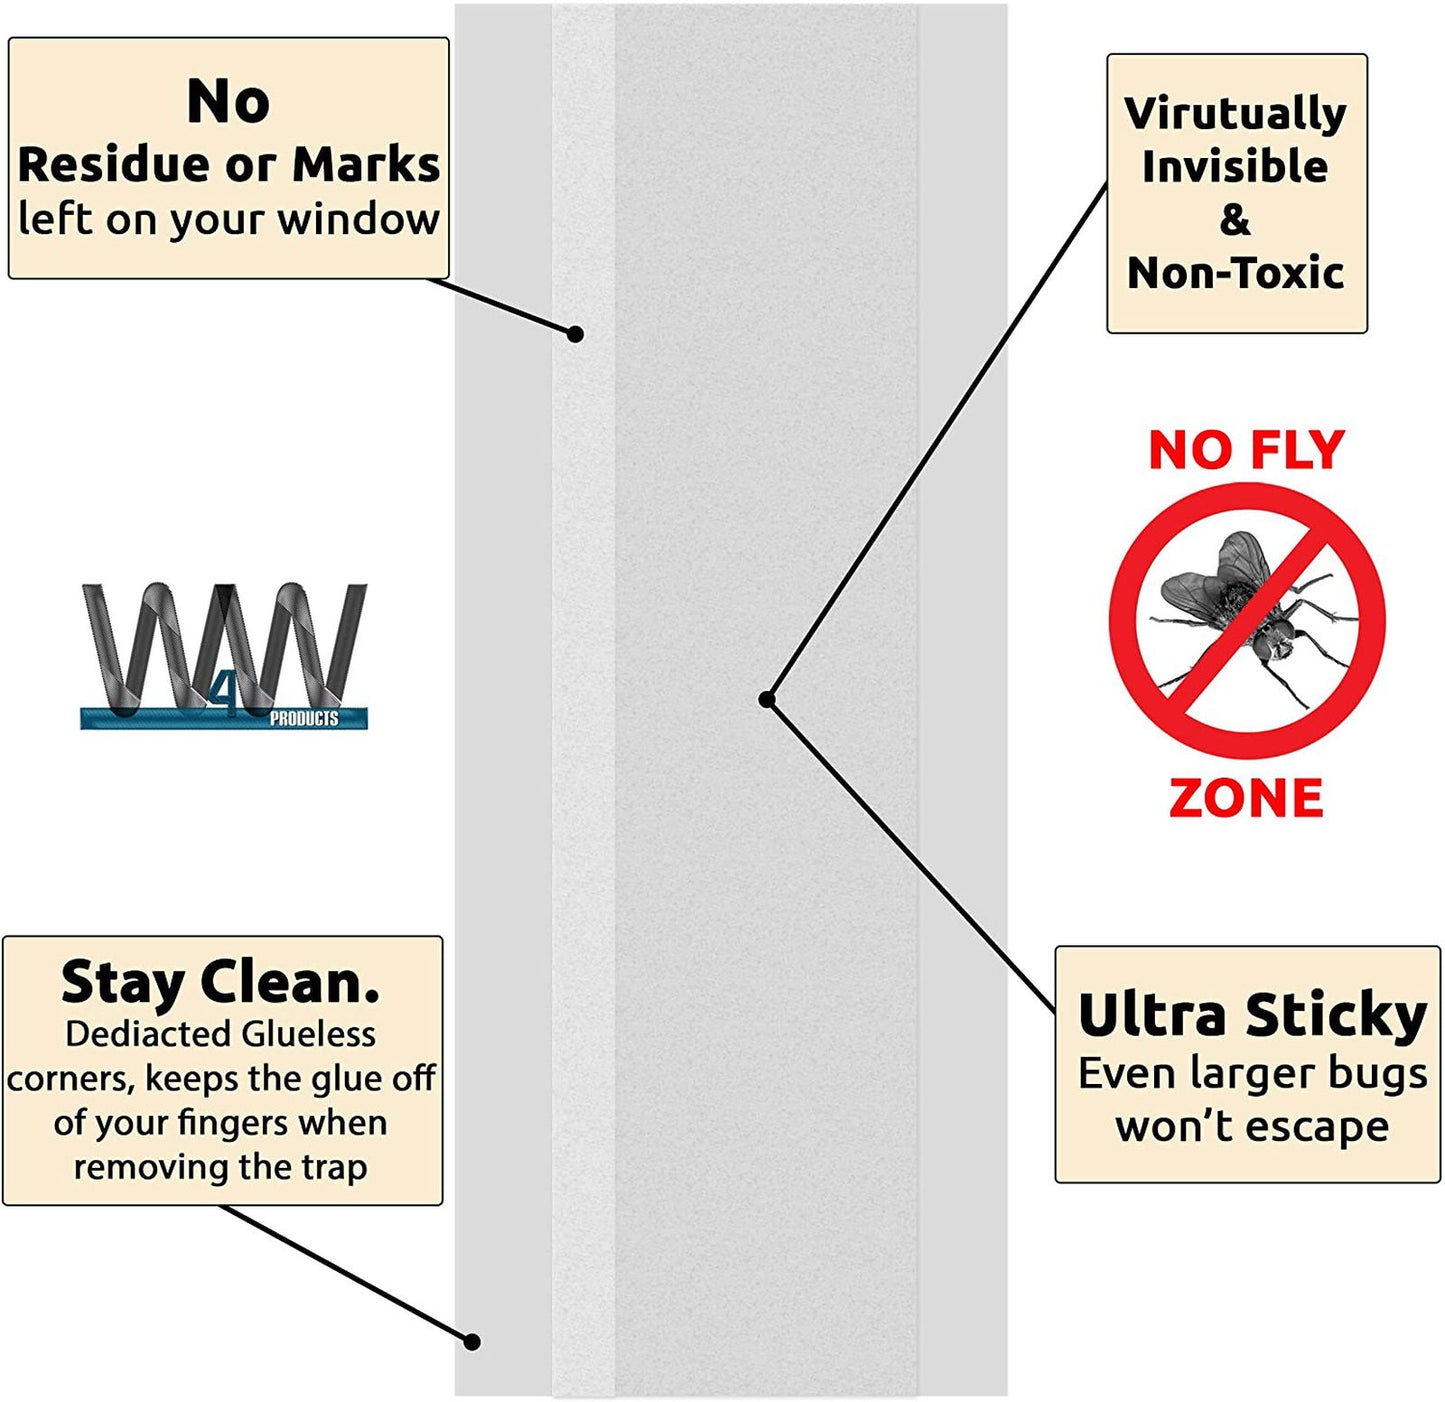 Window Bug & Fly Traps - Non-Toxic & Family Friendly [16 Traps] - W4W Products 